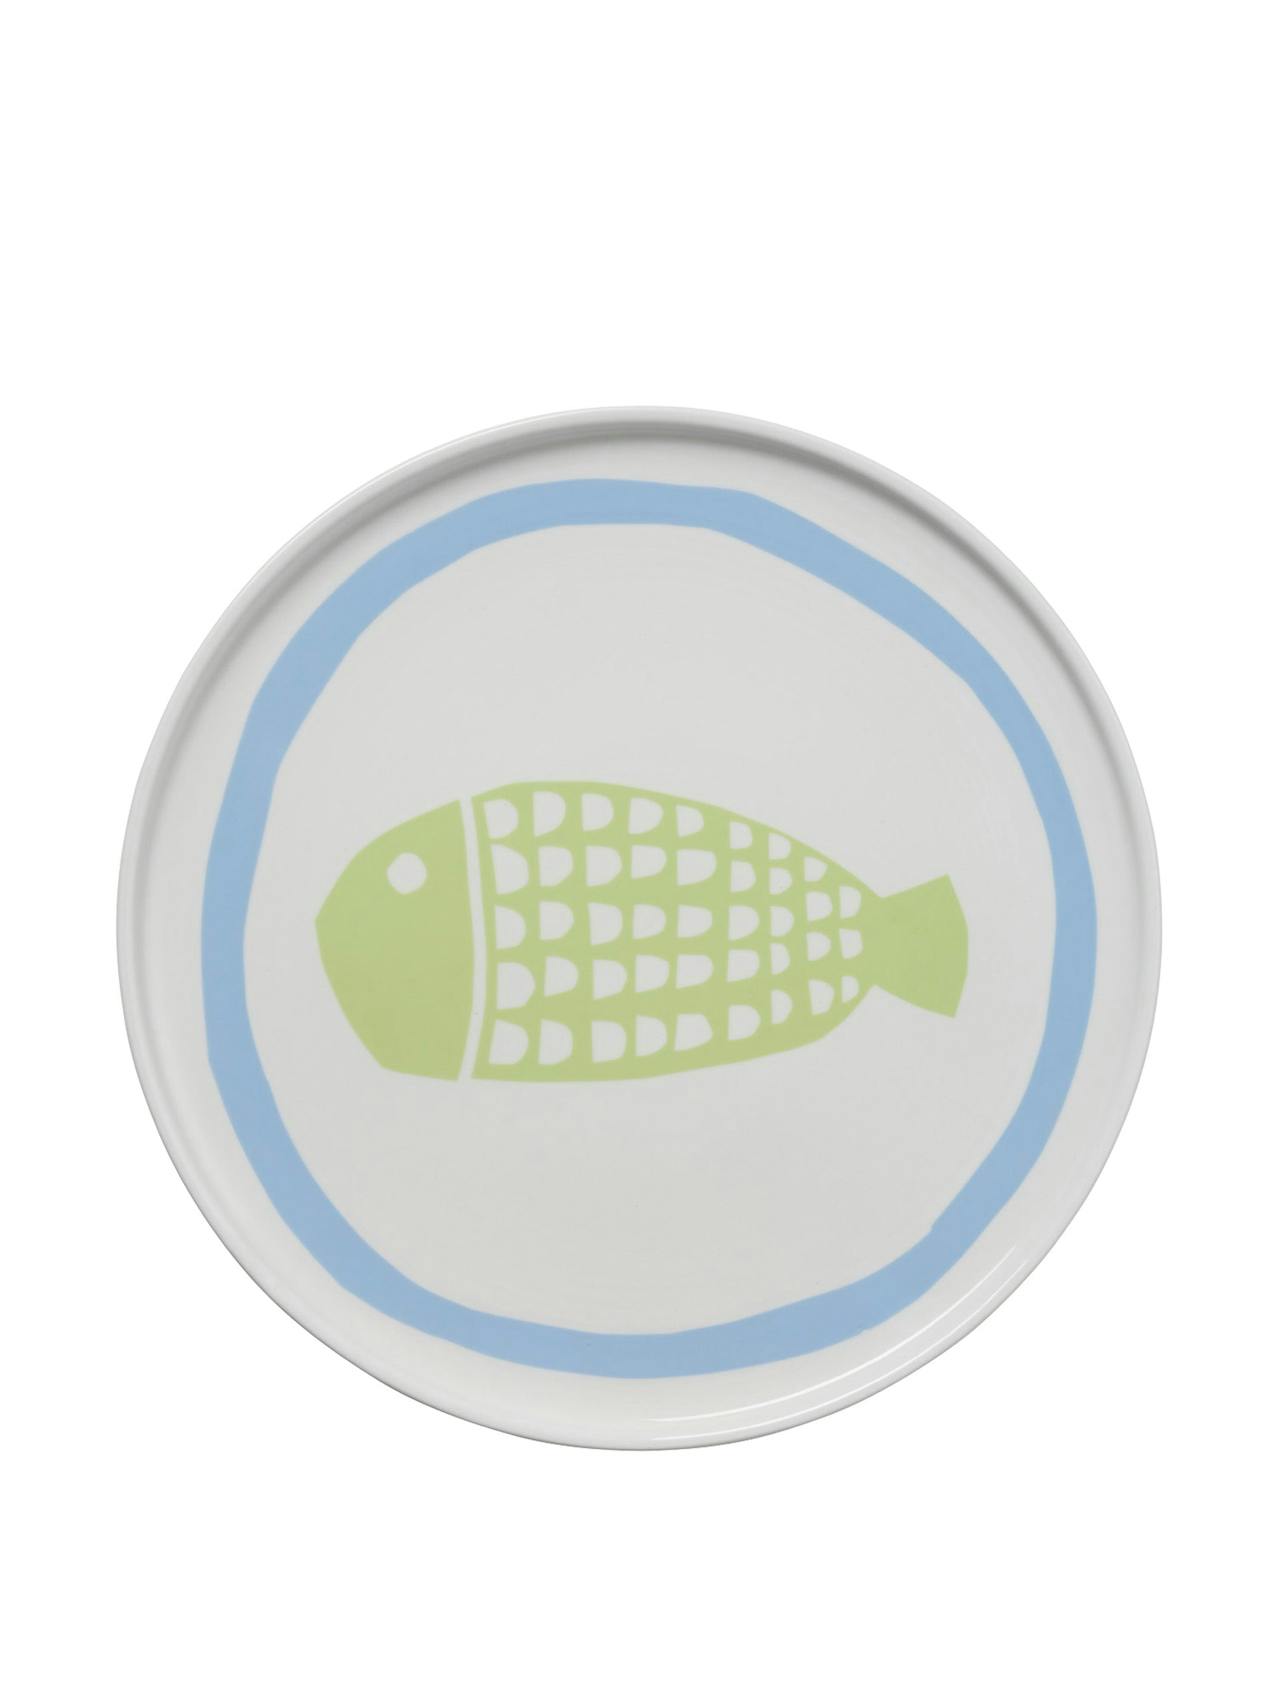 Fish plate